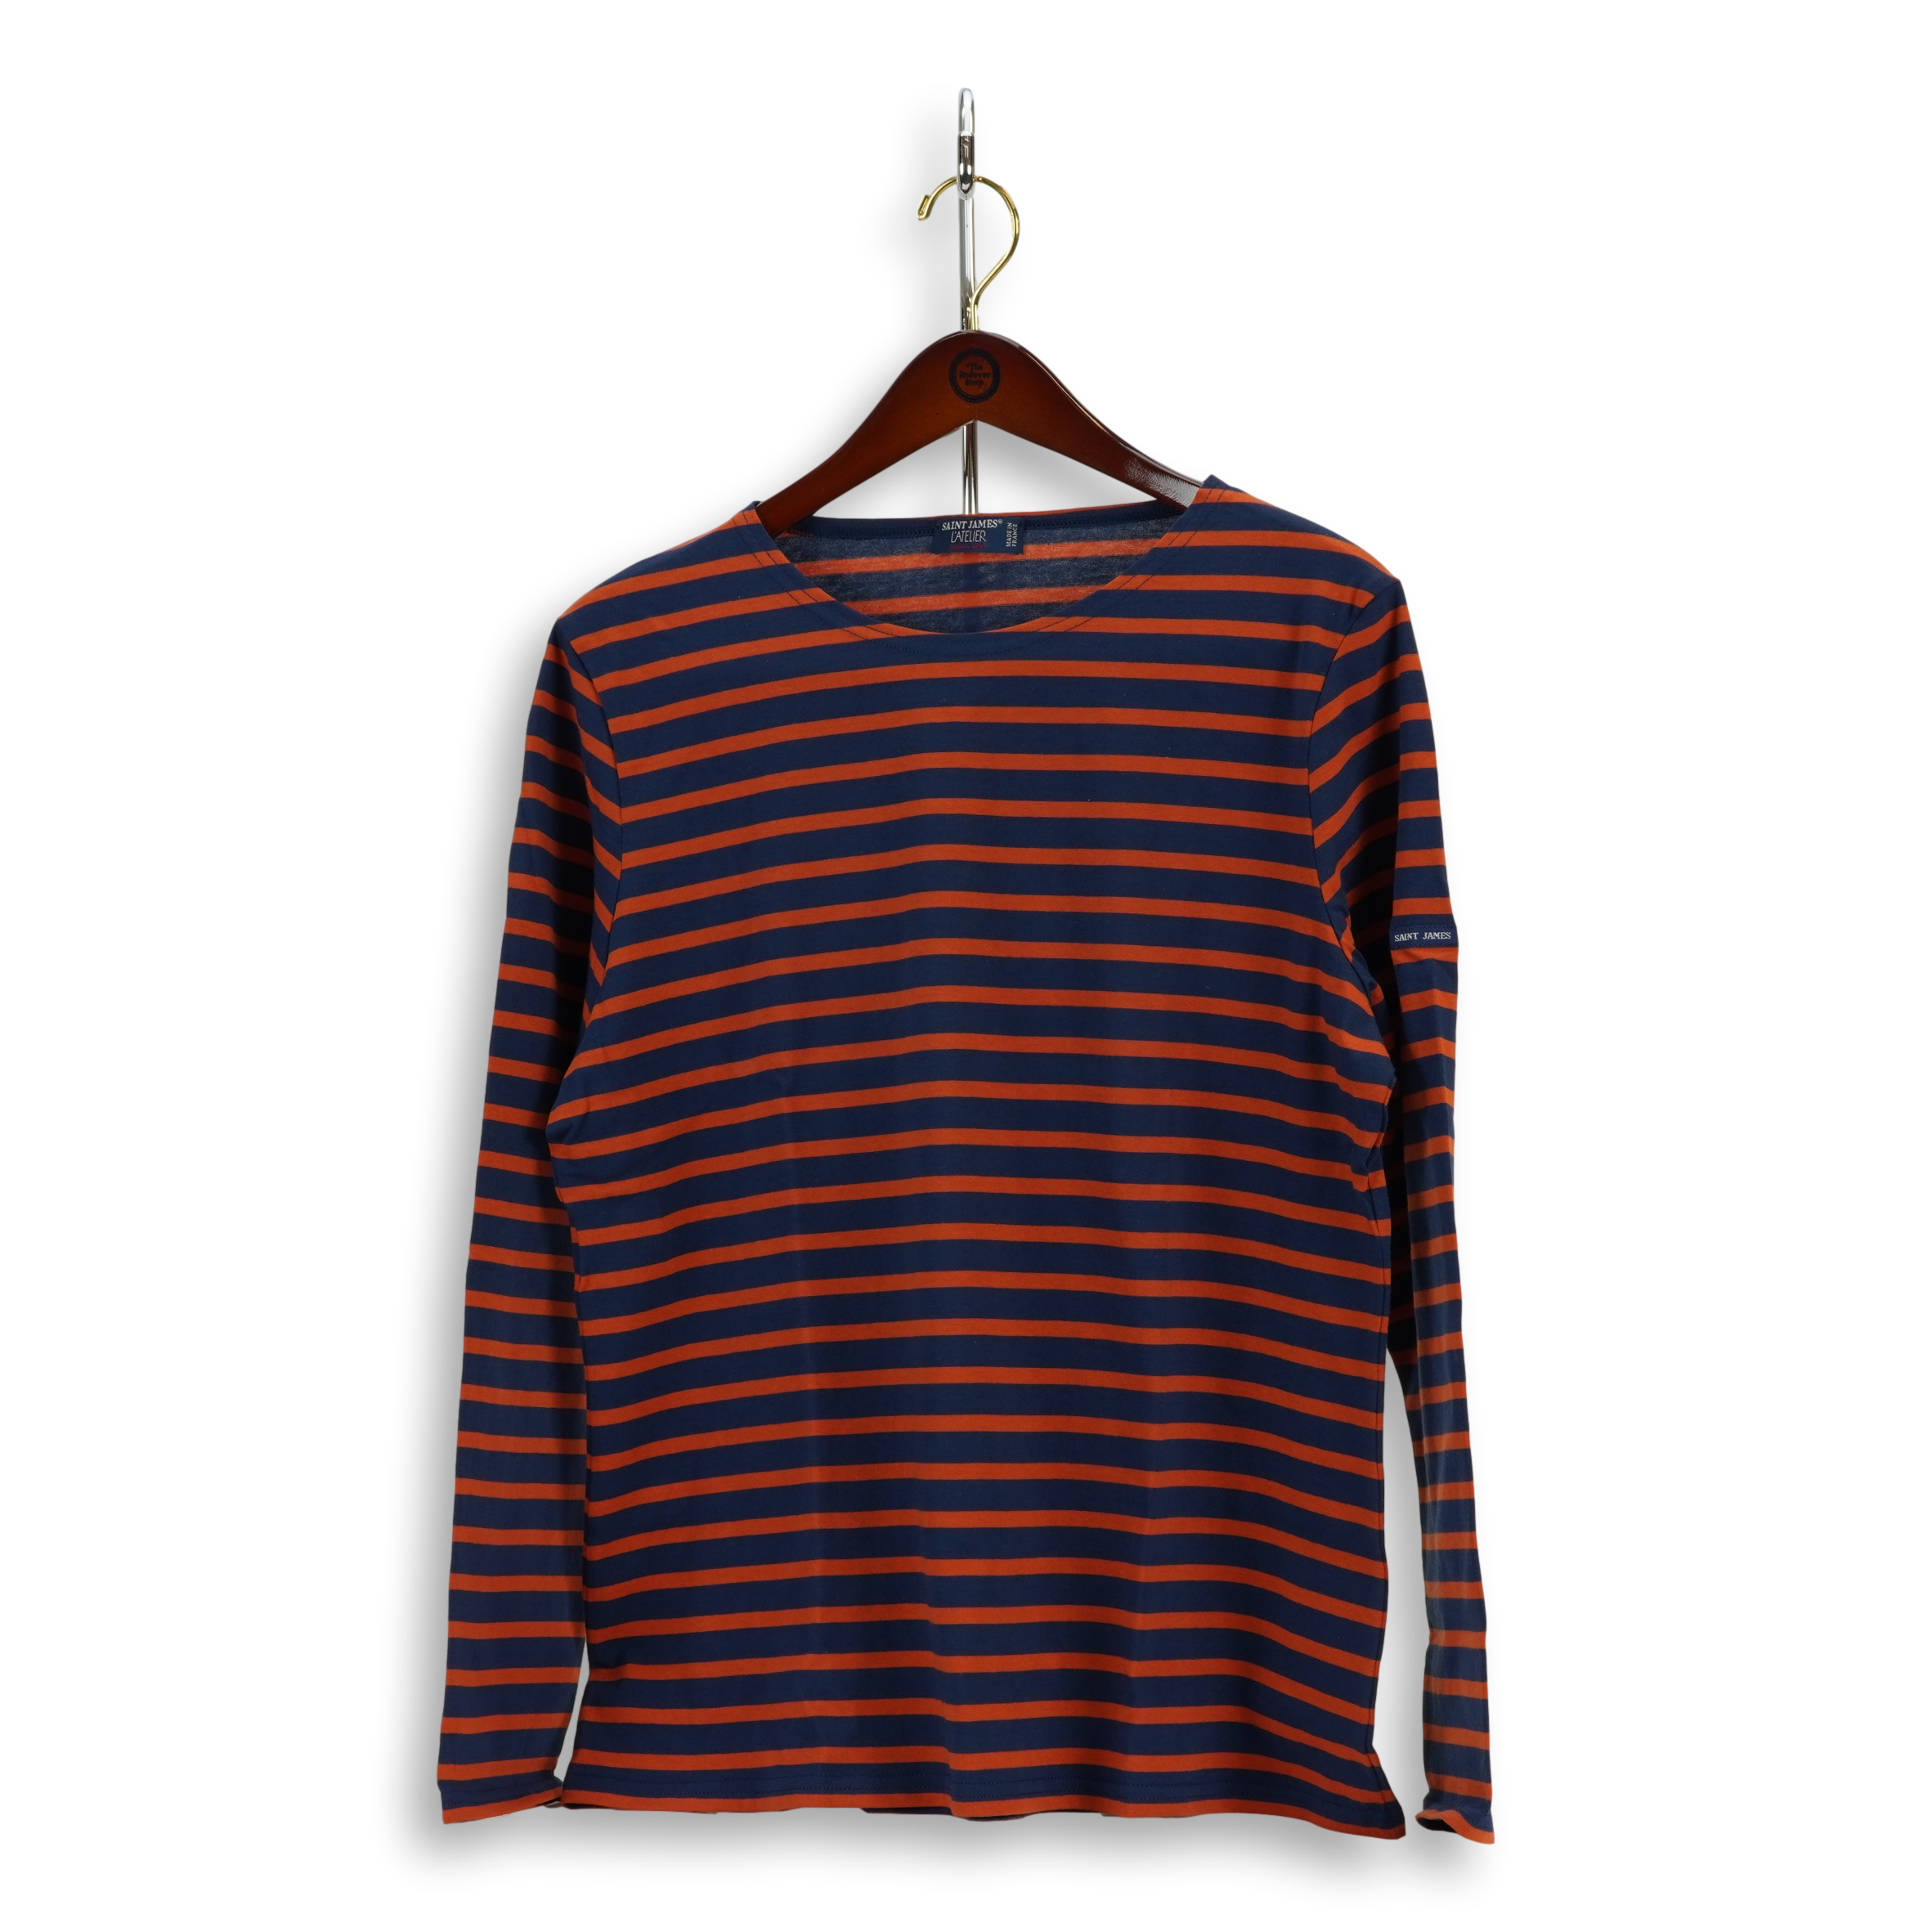 Minquidame Striped Shirt